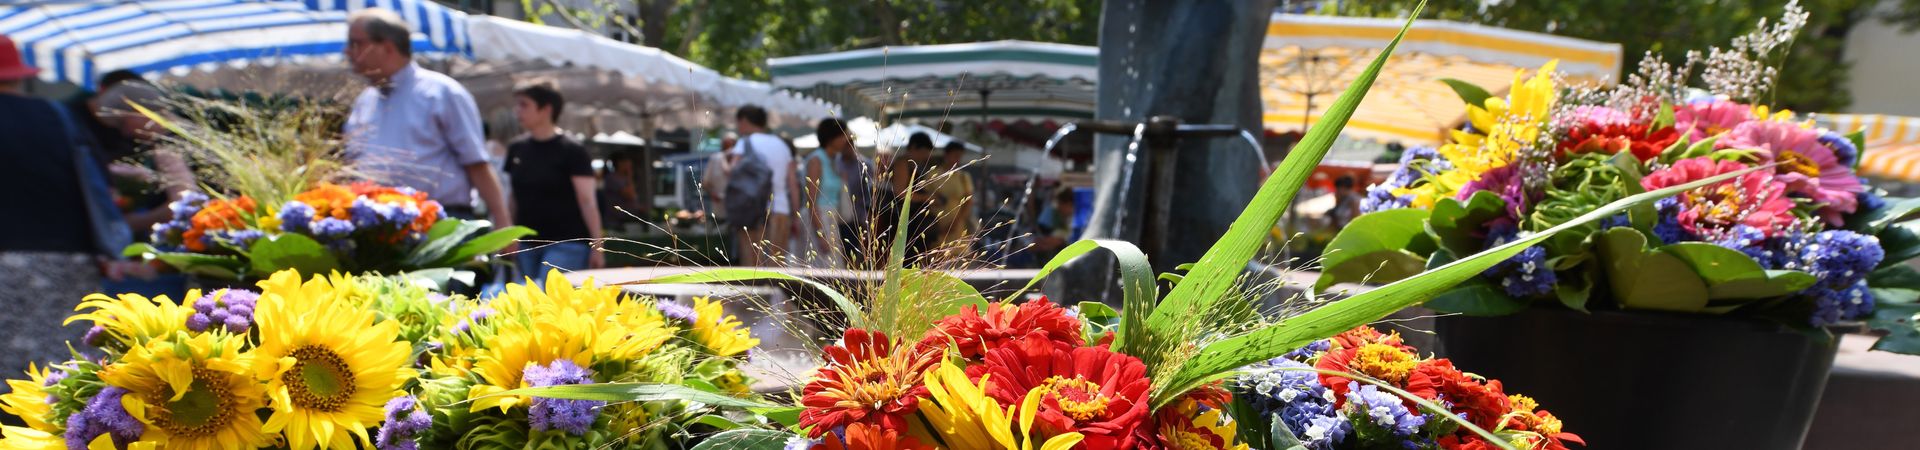 Blumengebinde am Marktbrunnen